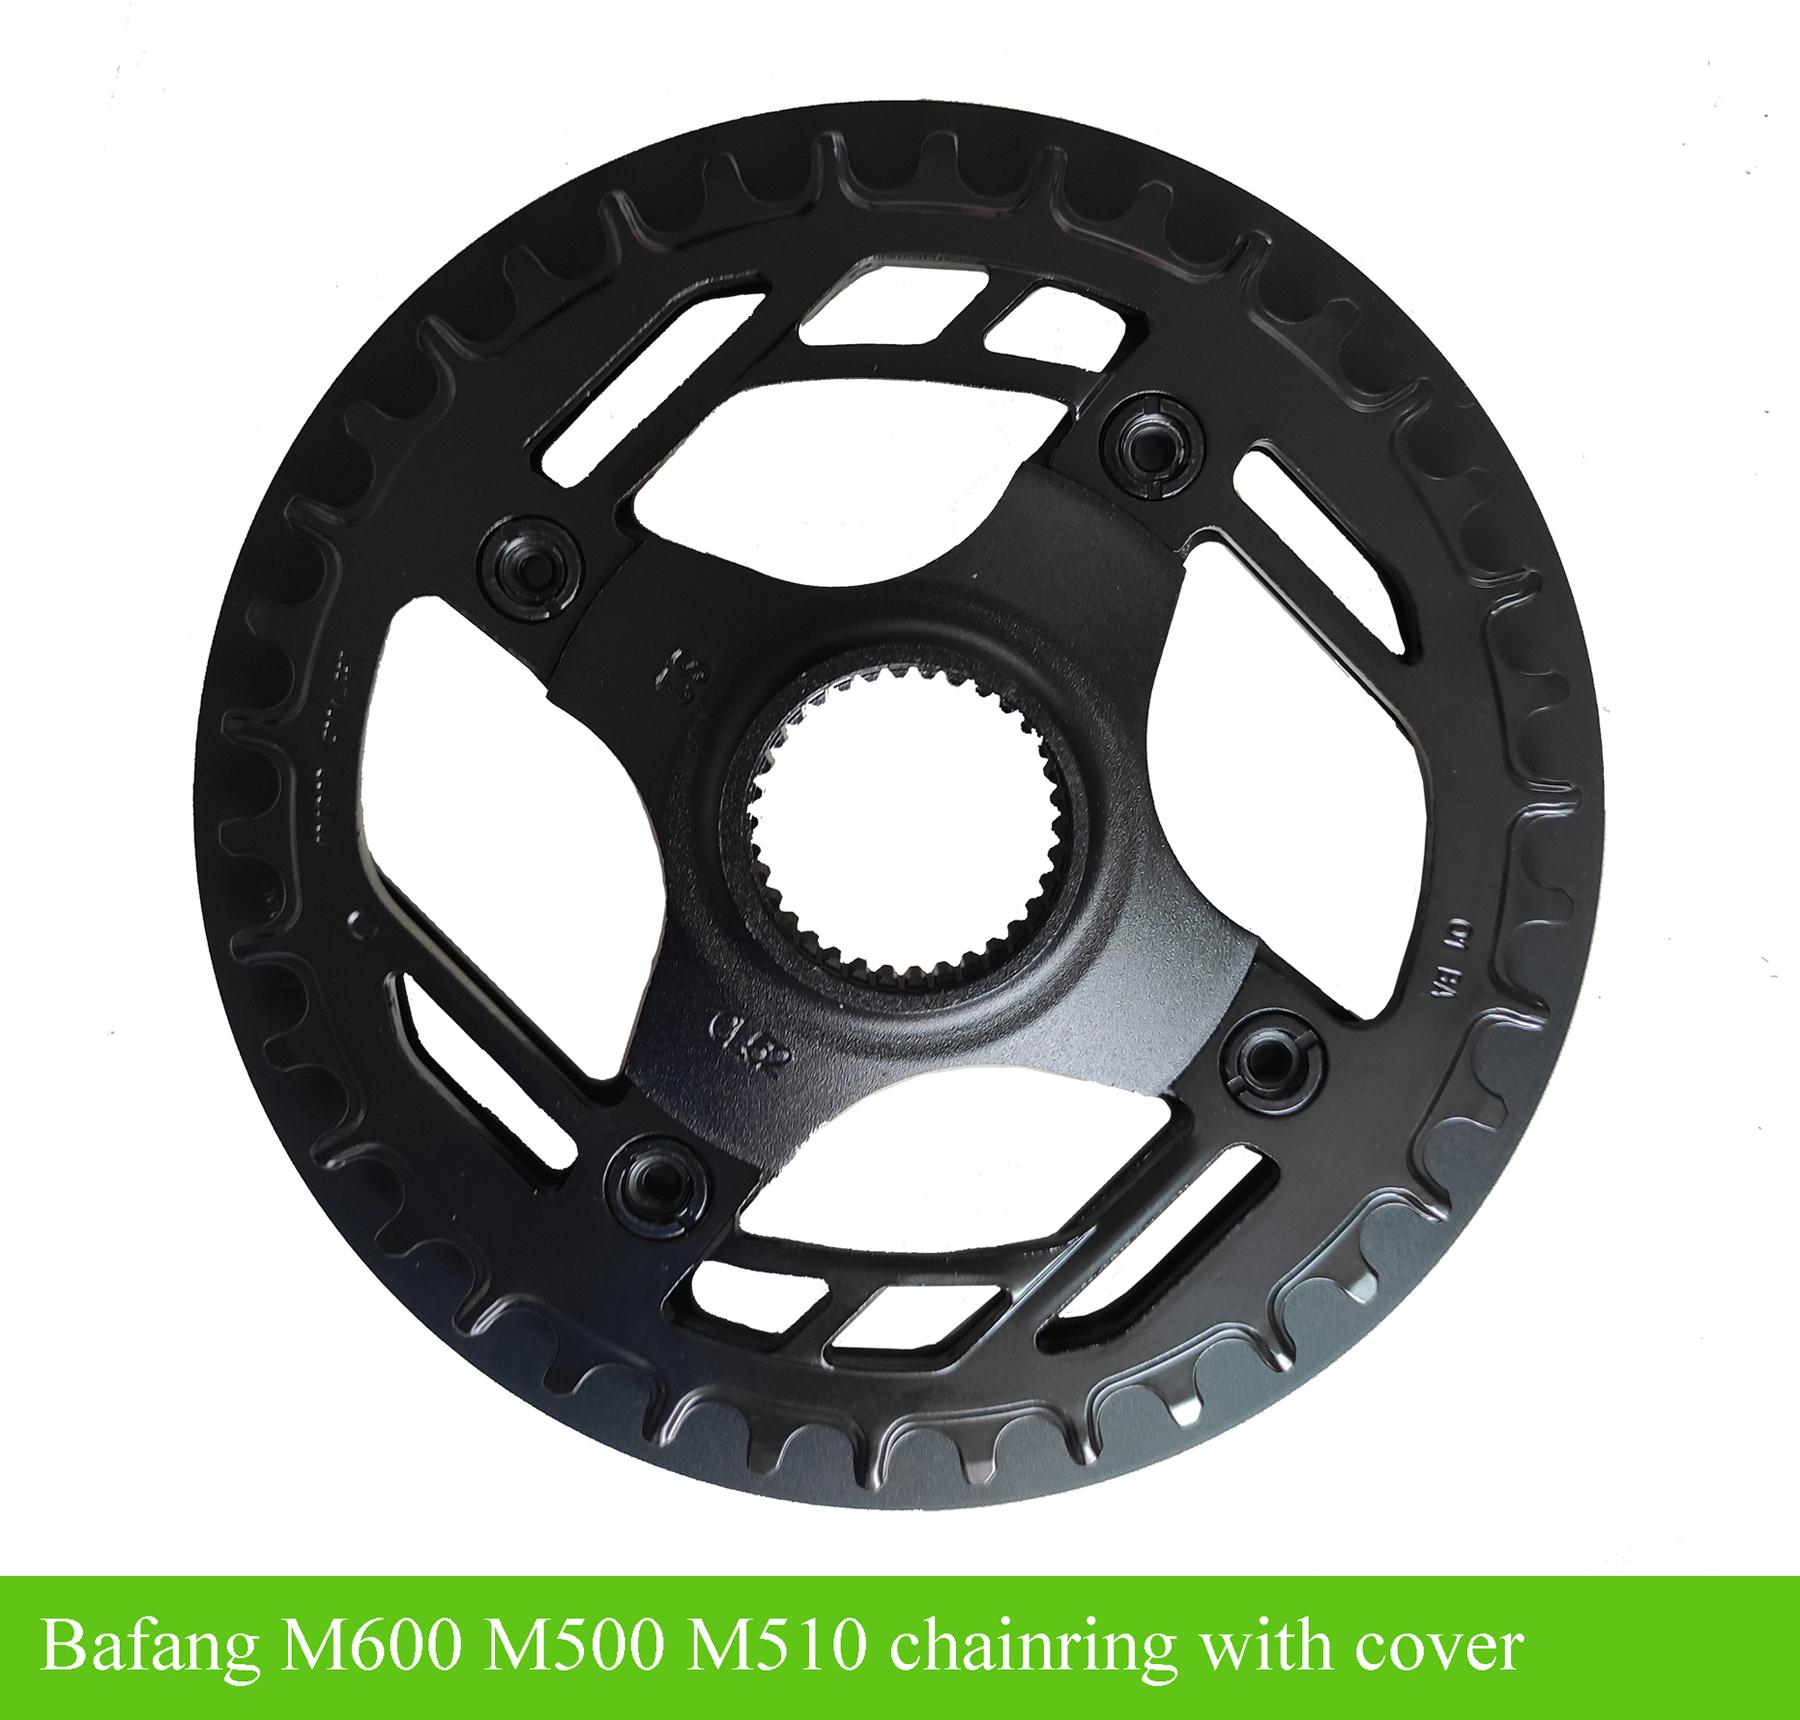 https://www.greenbikekit.com/media/catalog/product/b/a/bafang-m600-m510-m500-chain-wheel-with-cover.jpg